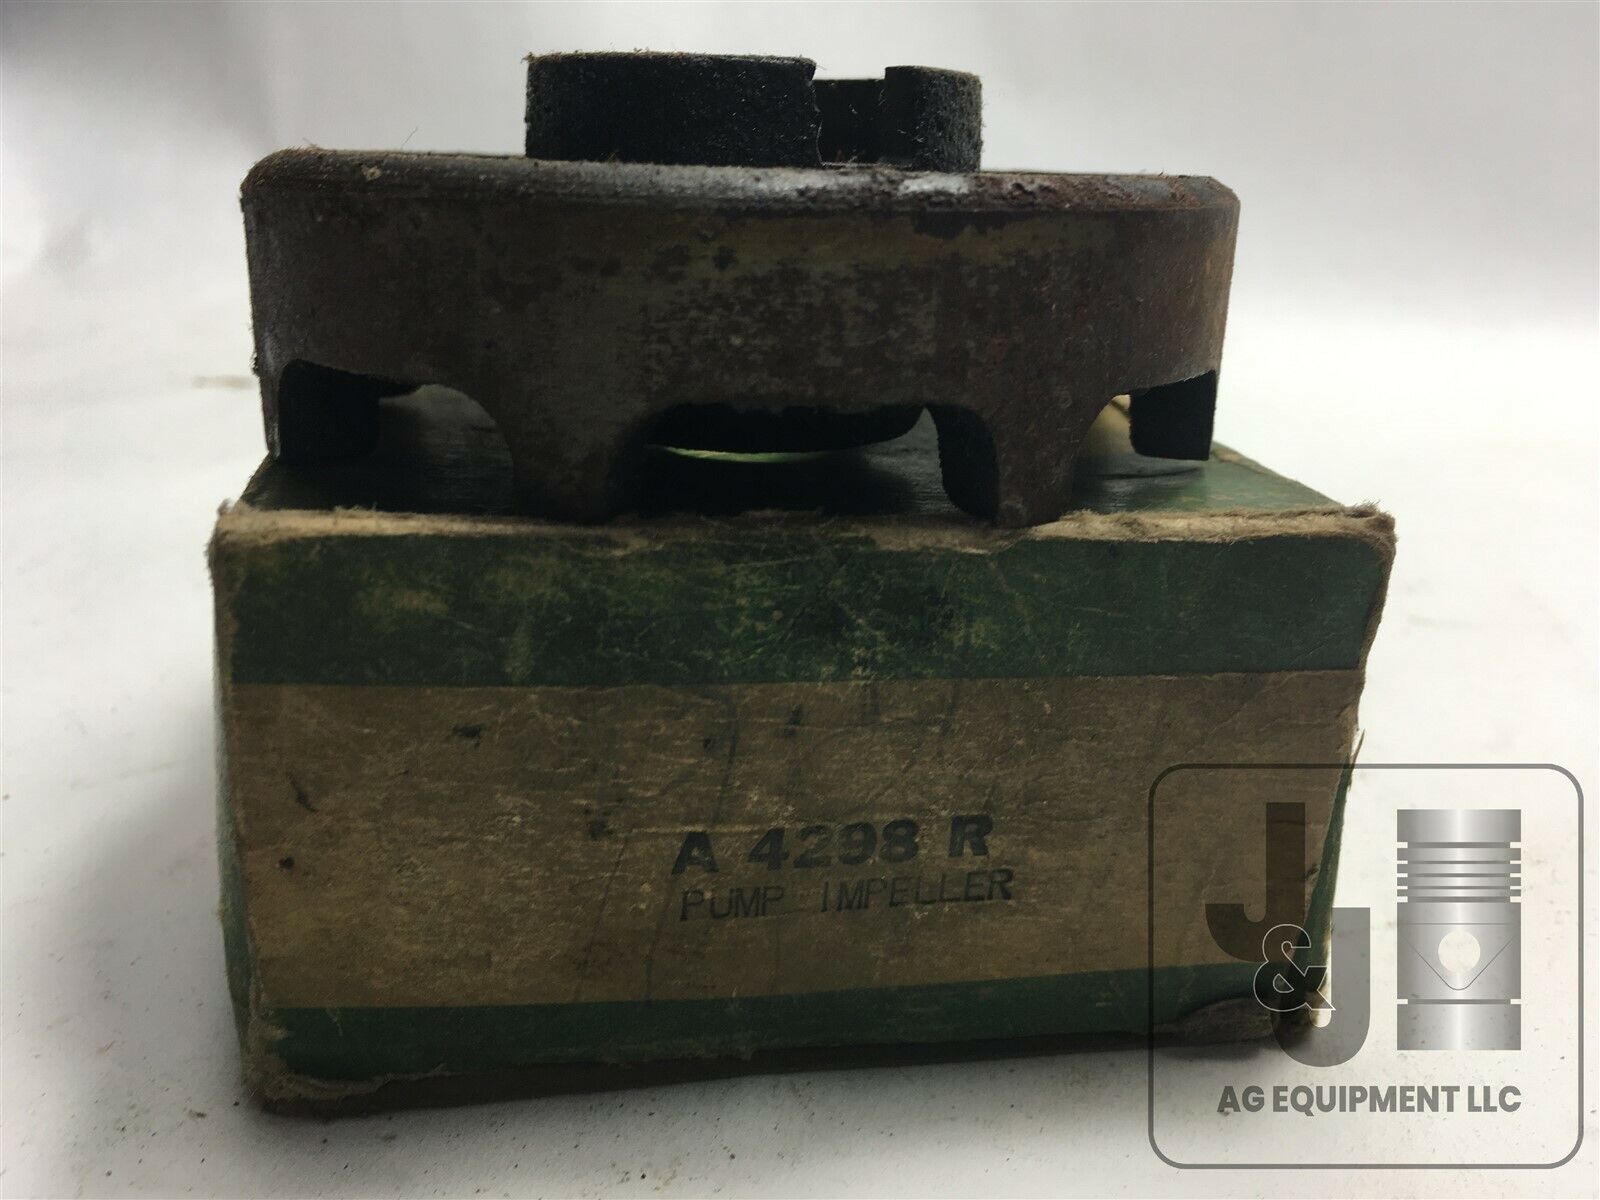 John Deere Genuine Parts - A4298R - Impeller - IMPELLER,WATER PUMP